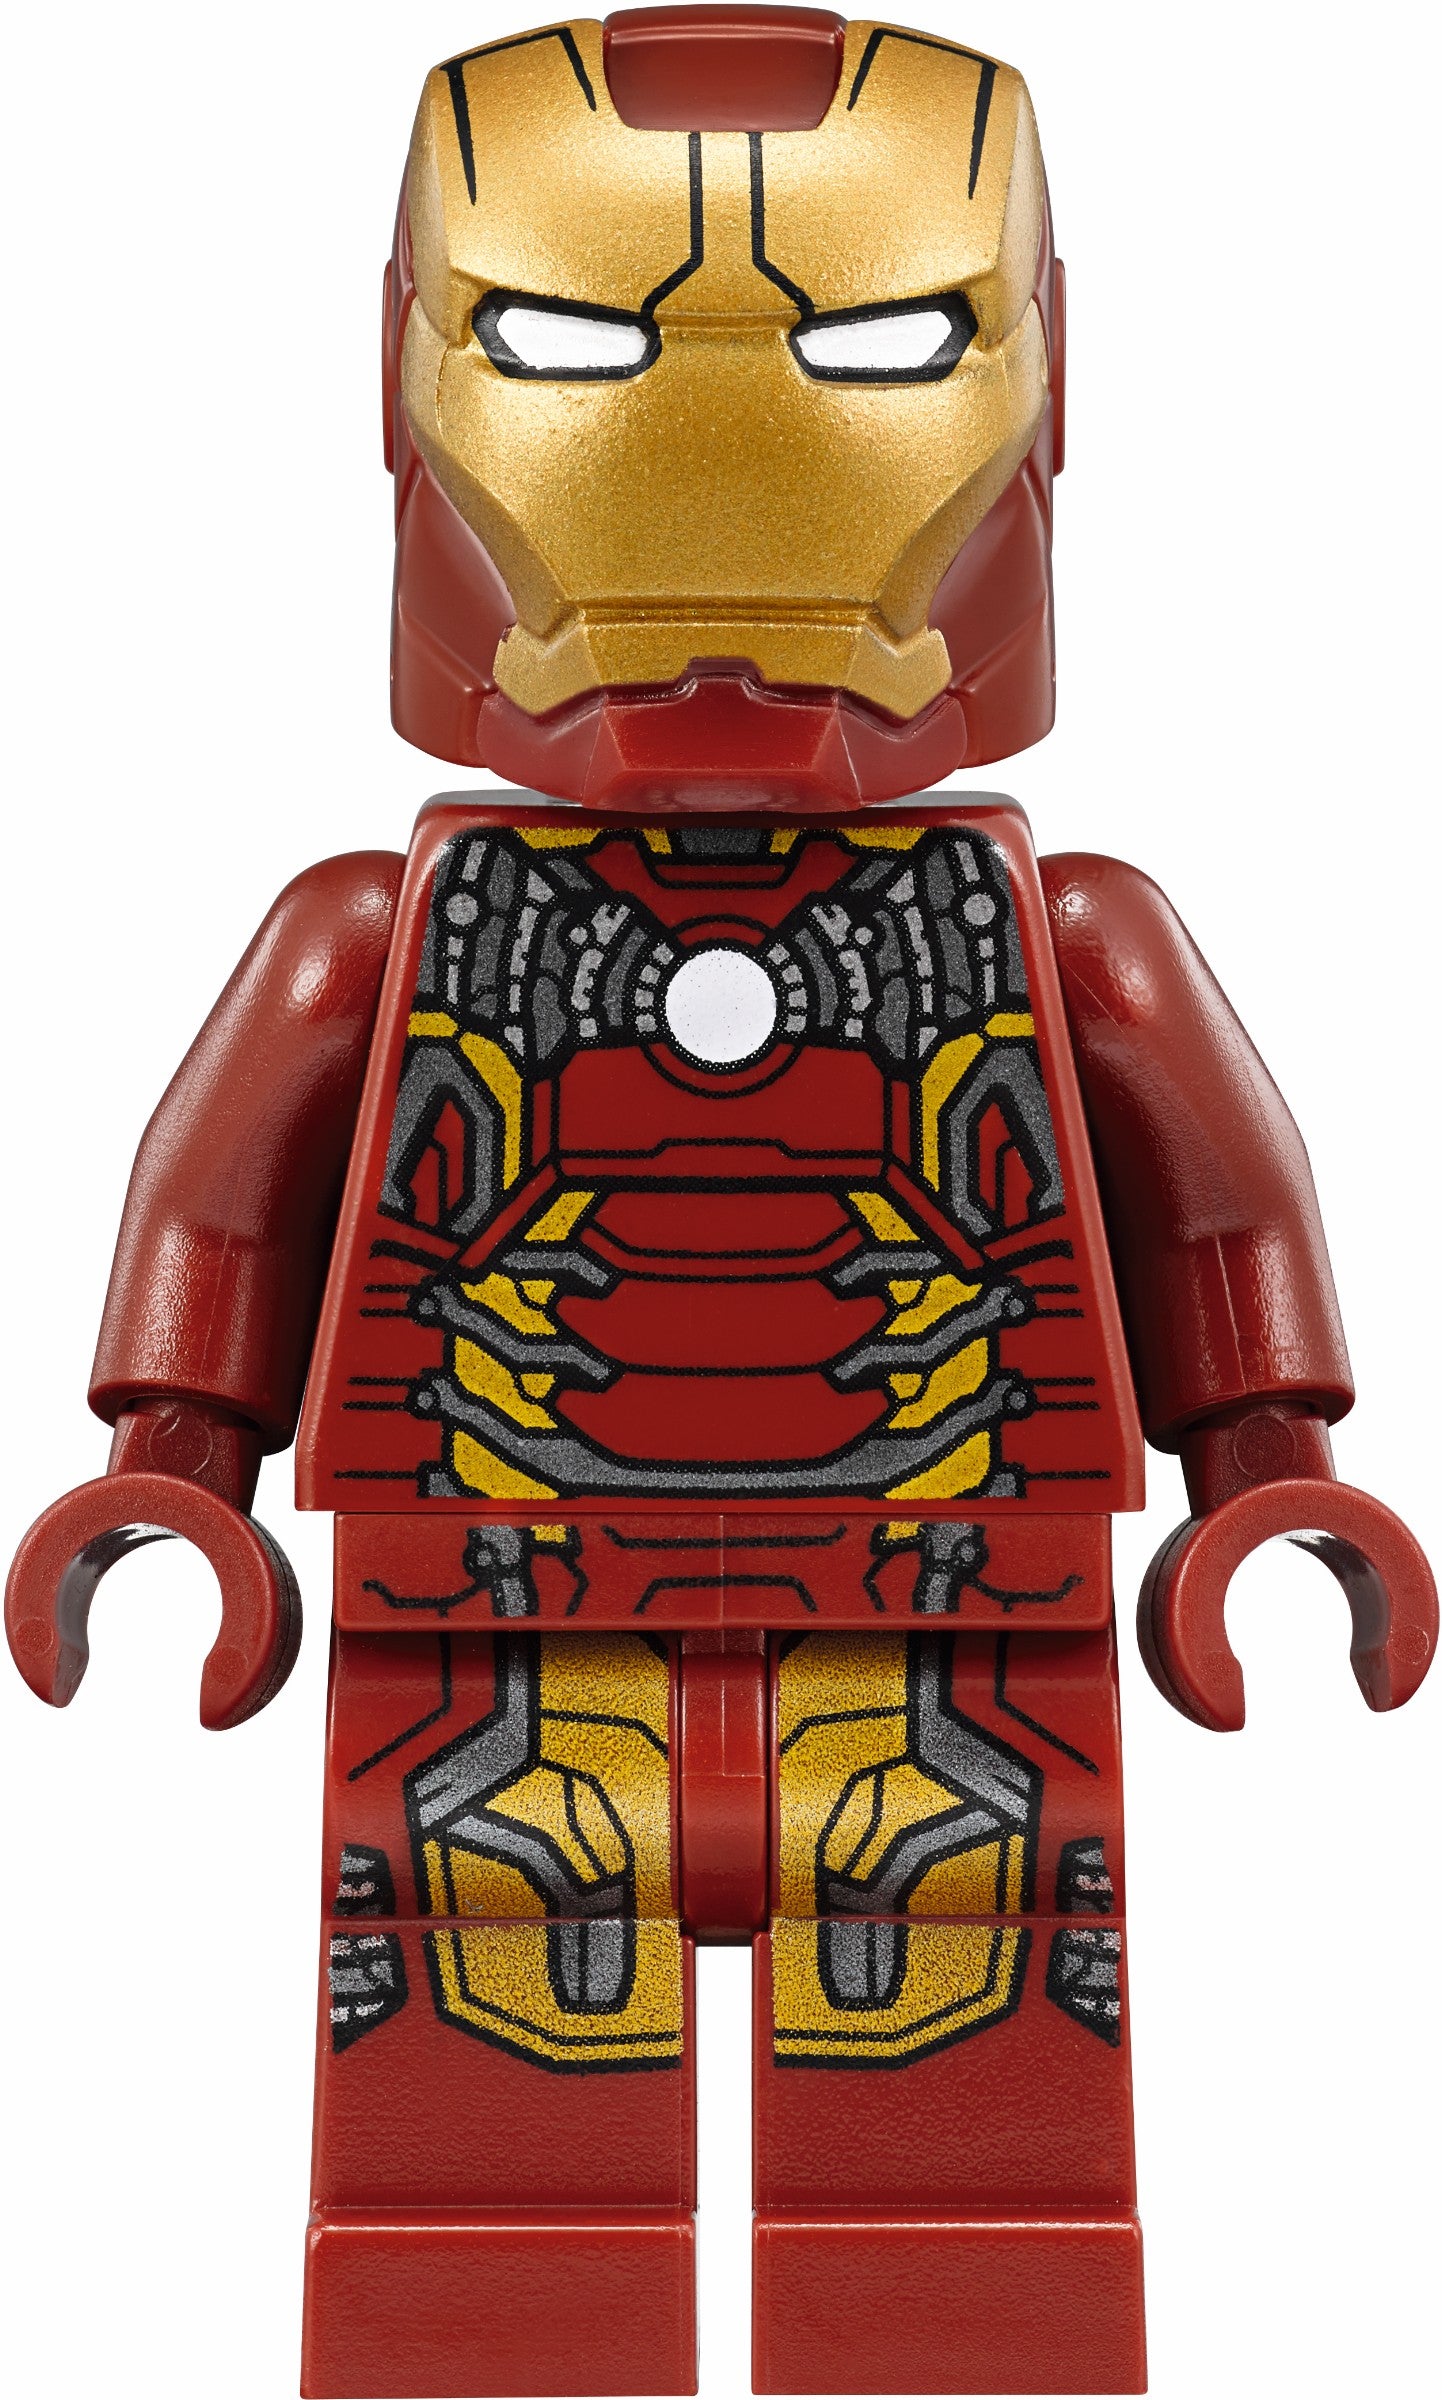 LEGO Hulkbuster Ultron Editie 76105 Superheroes (USED)